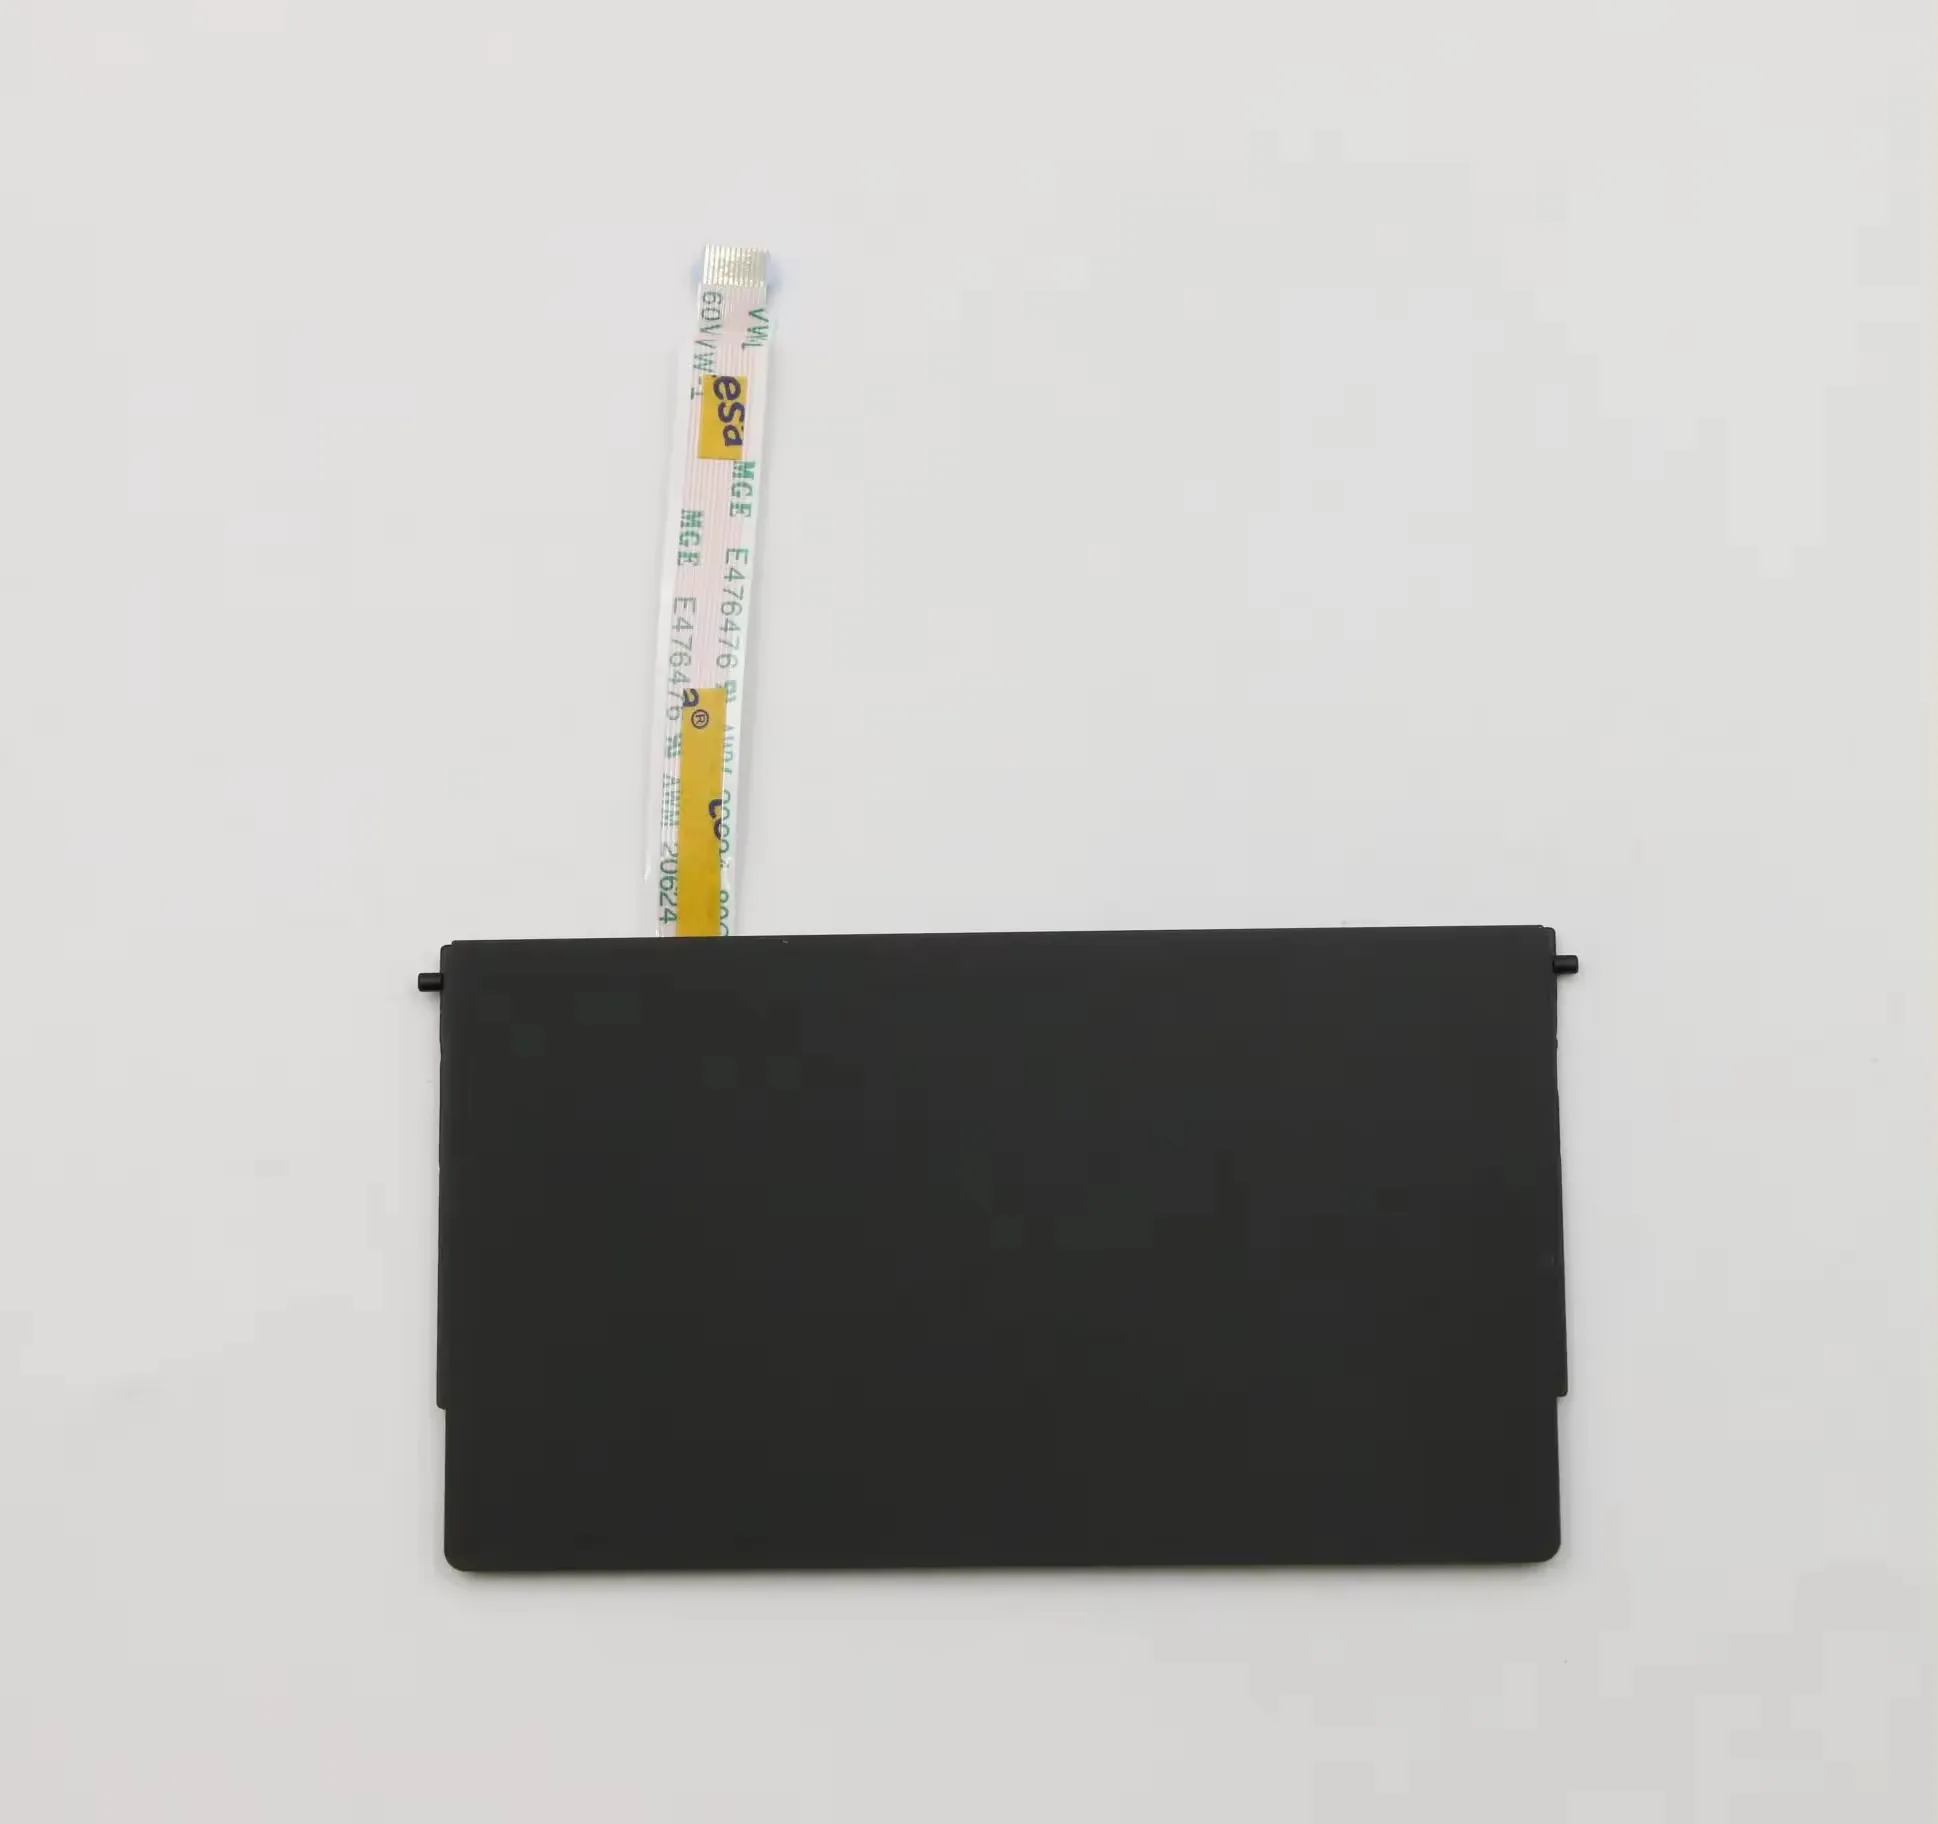 Новый/Orig Touchpad Mouse Pad Clicker для Lenovo ThinkPad X1 Carbon 4th x1 йога 1 -й поколение ноутбука Fru 01AW994 00JT861